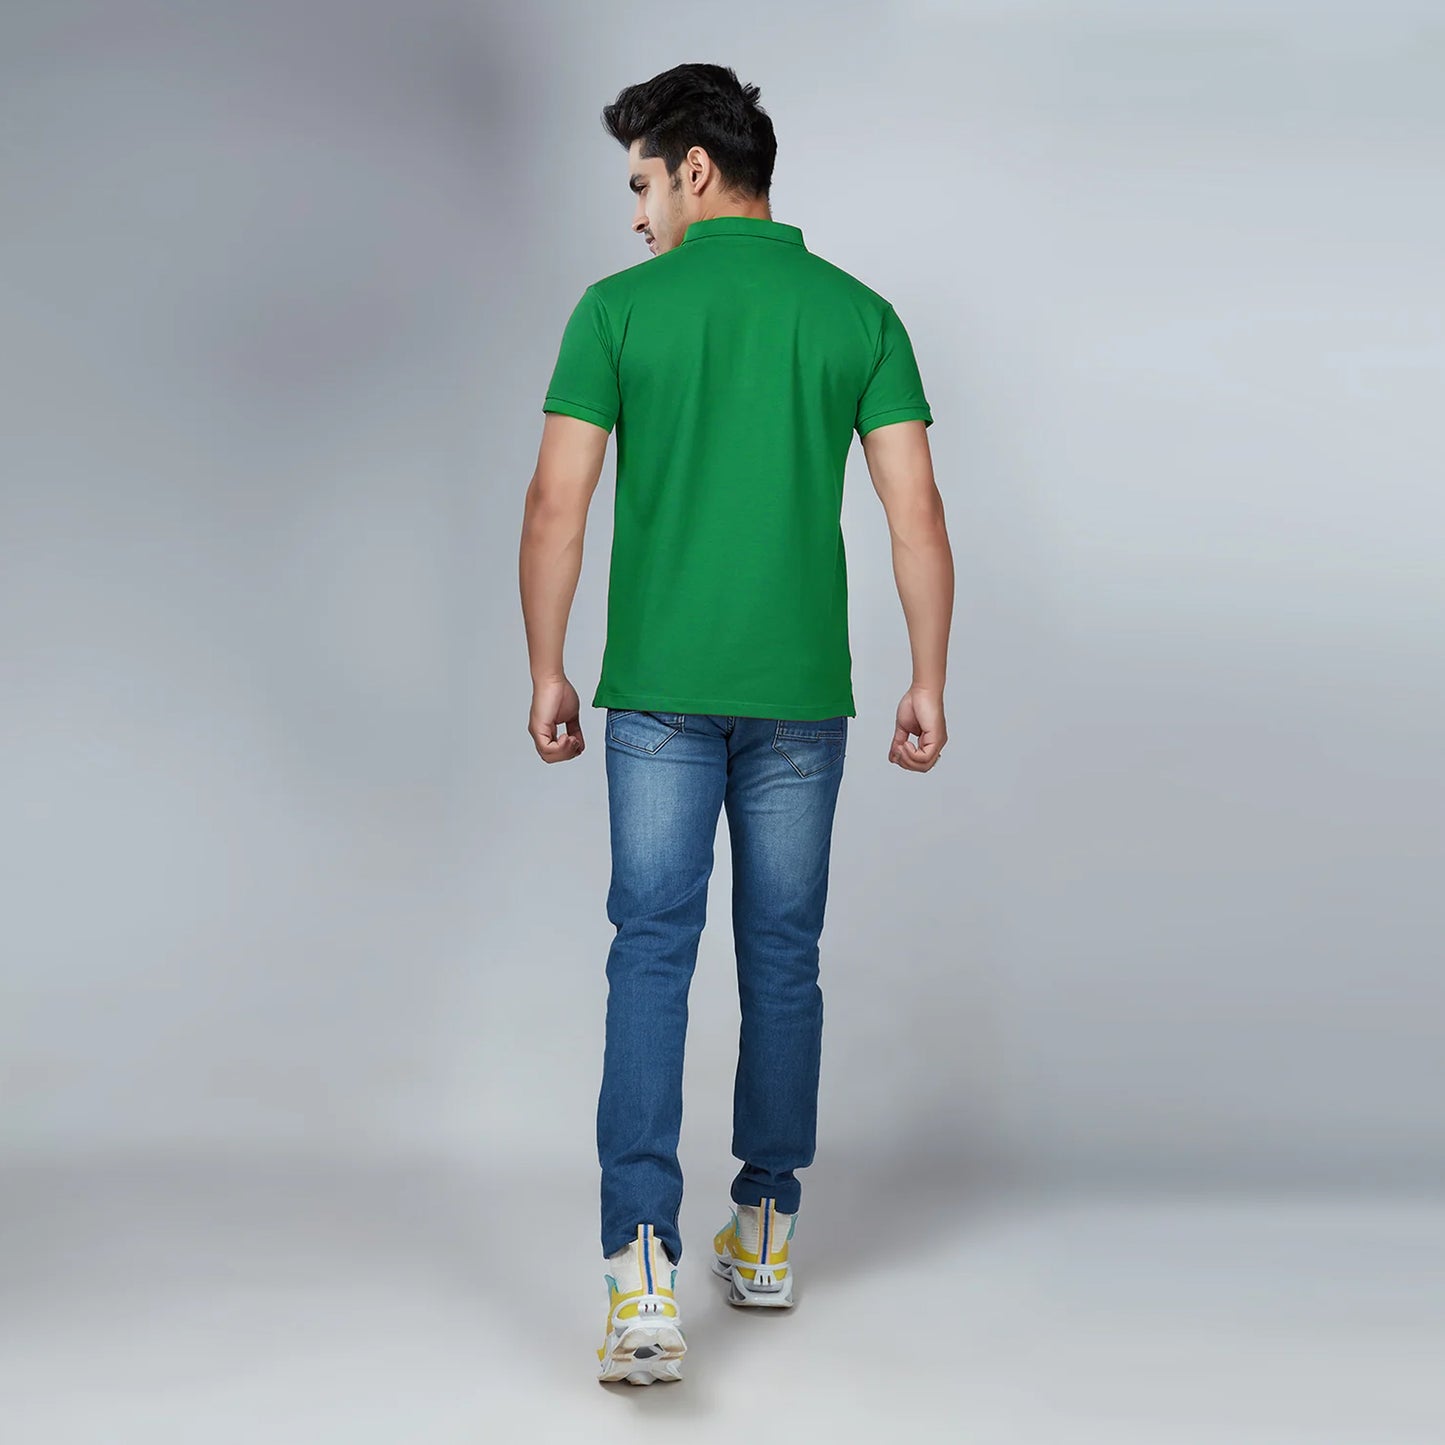 Men's Green Polo T-Shirt